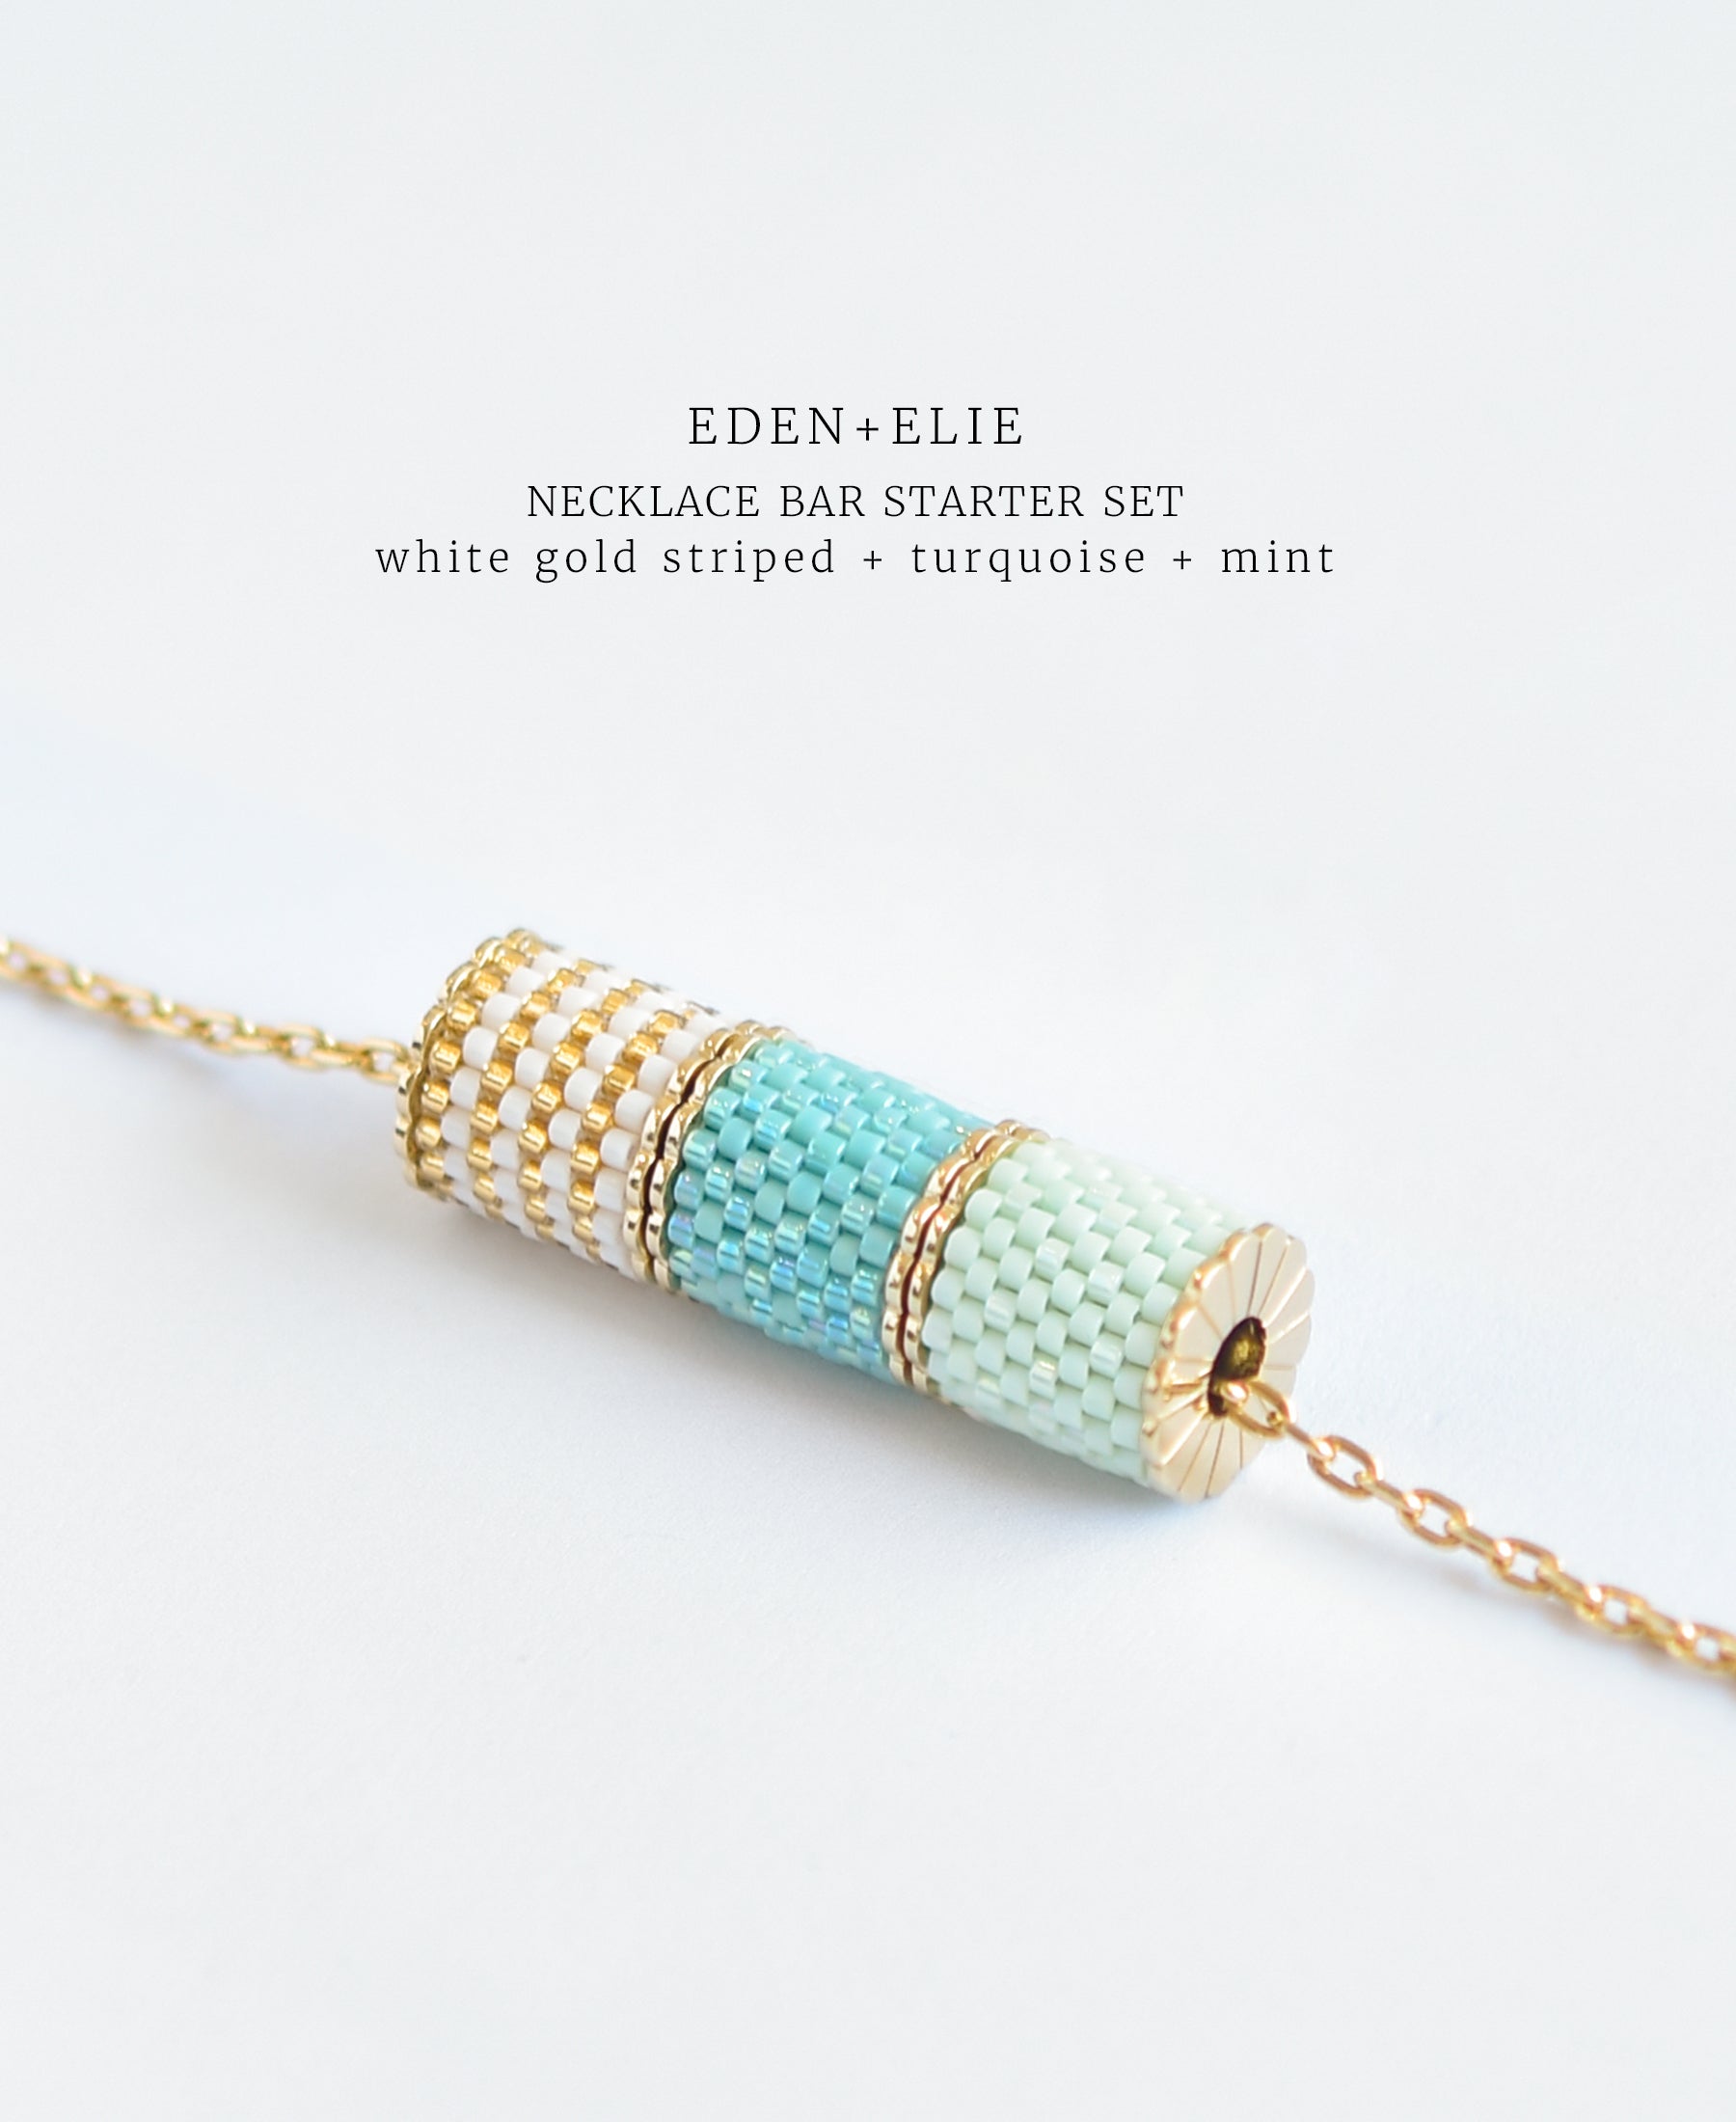 EDEN + ELIE Necklace Bar 3 bead starter set - mint + turquoise + white gold striped